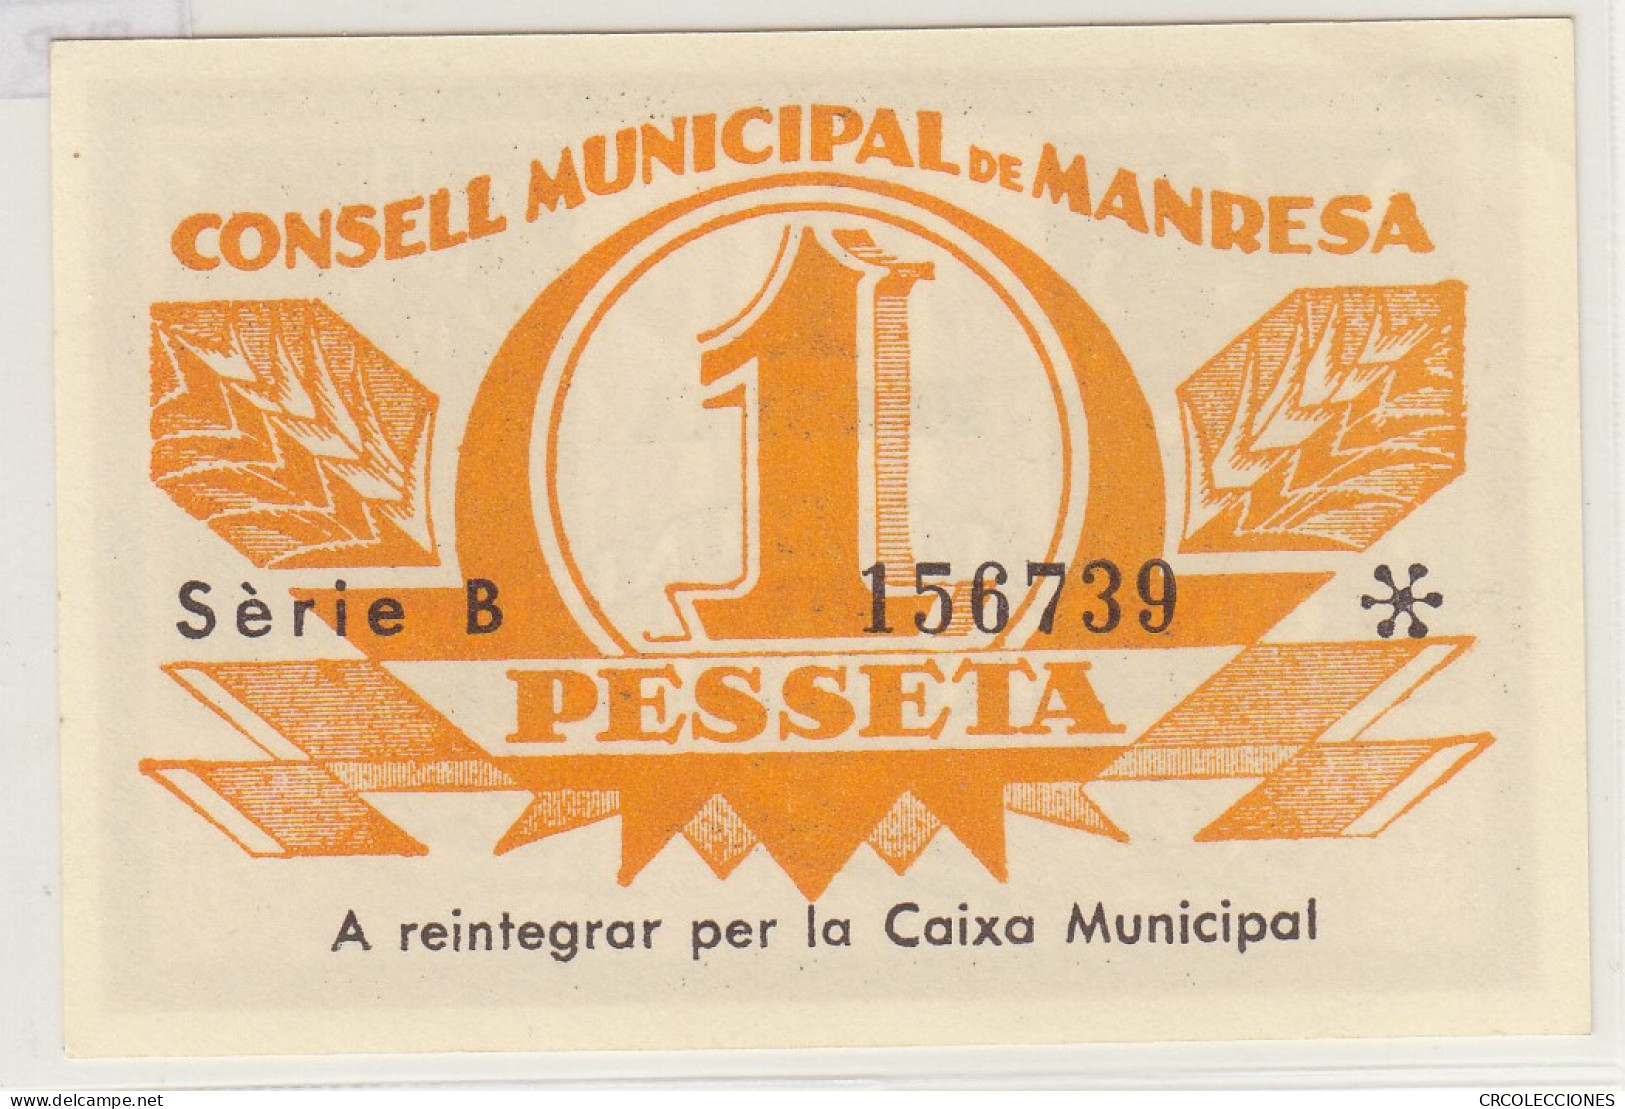 BILLETE ESPAÑA MANRESA 1 PESETA 1937 CW-CAT-MANR2 SIN CIRCULAR - Altri & Non Classificati